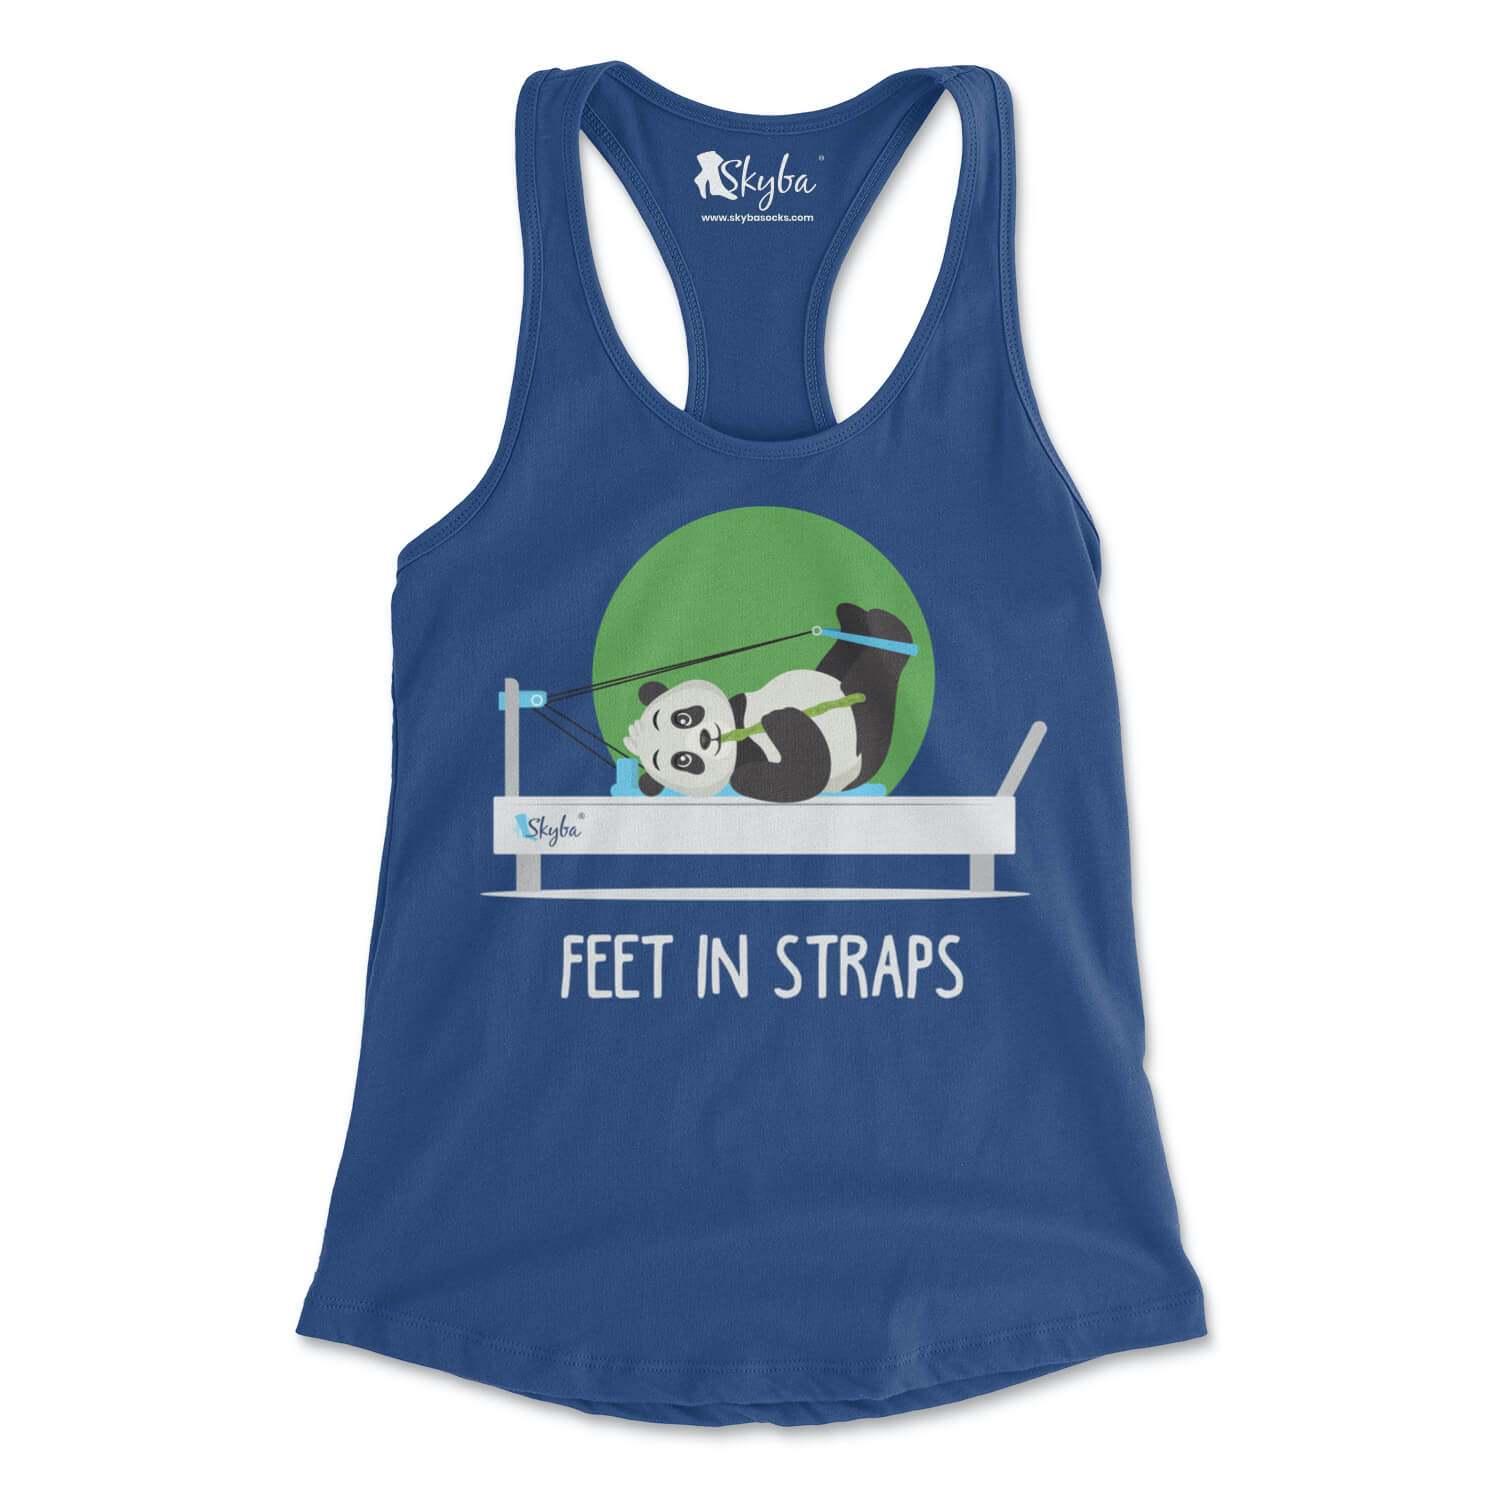 "Feet in Straps" Panda on Reformer - Women's Slim Fit Tank Skyba Tank Top